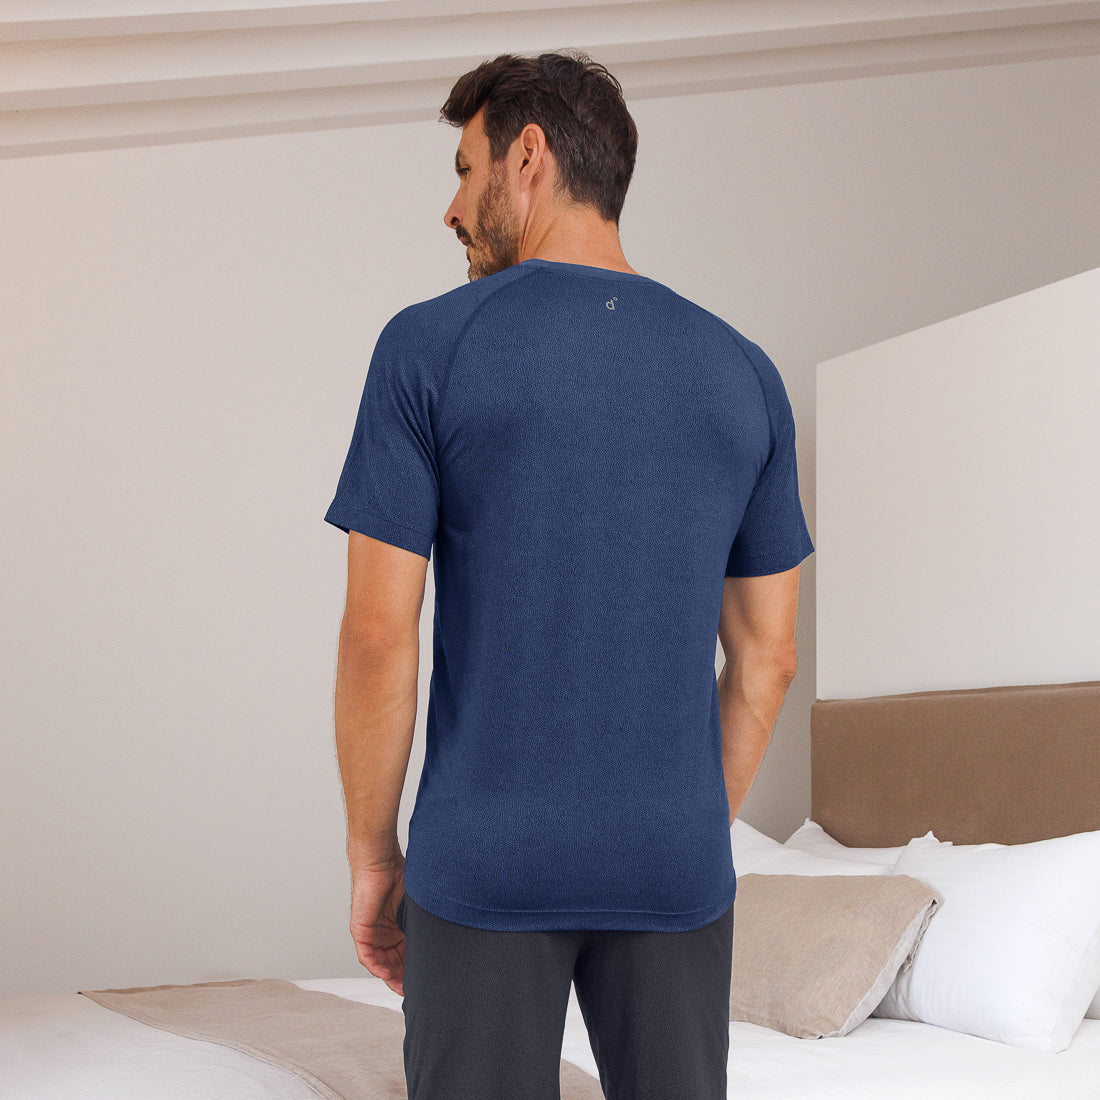 Muscle recovery black sleep t-shirt men || Stone blue